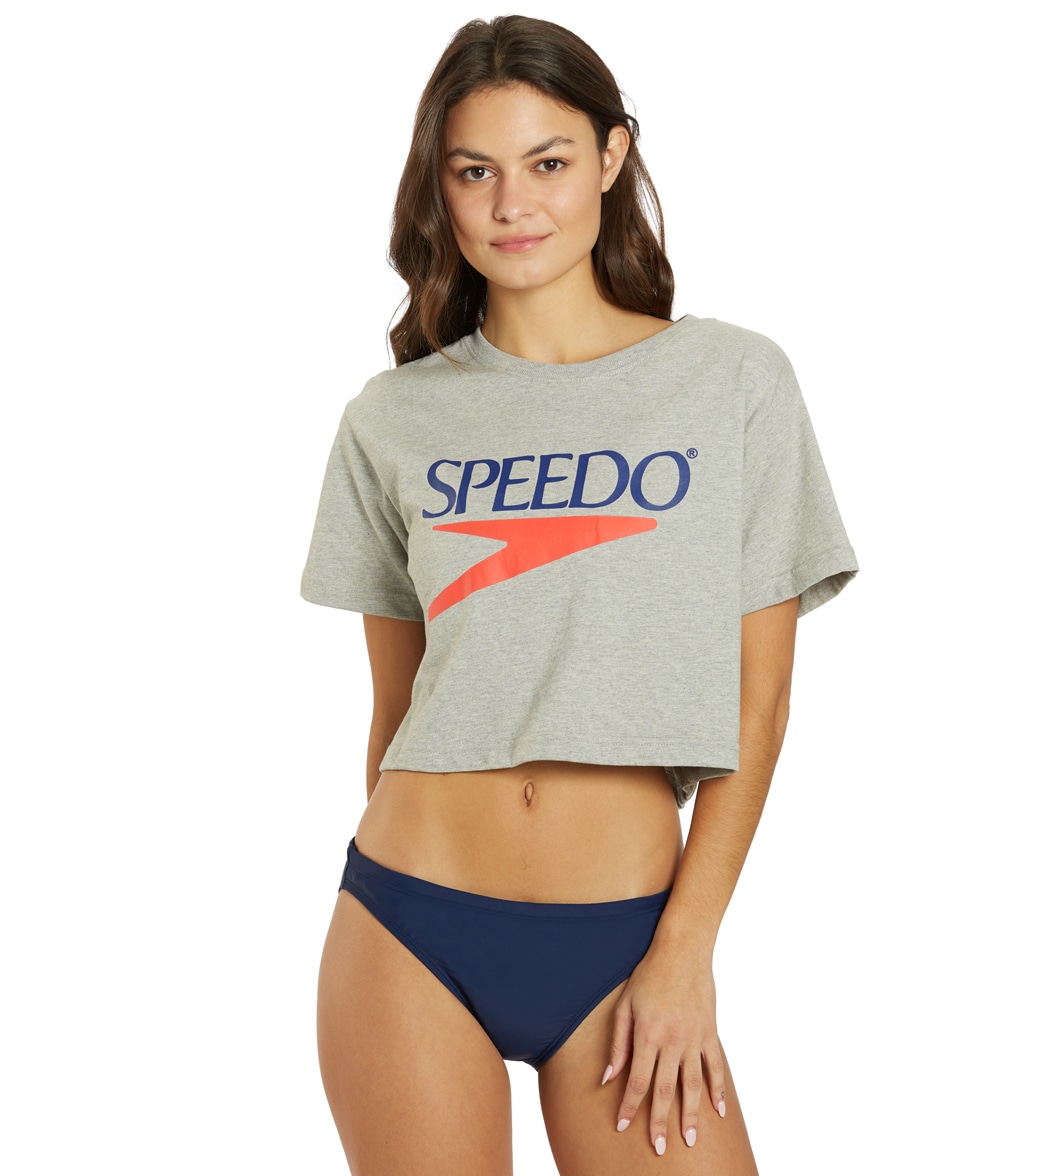 Speedo Women's Vintage Cropped Tee Shirt - Medium Heather Grey Small Size Small - Swimoutlet.com